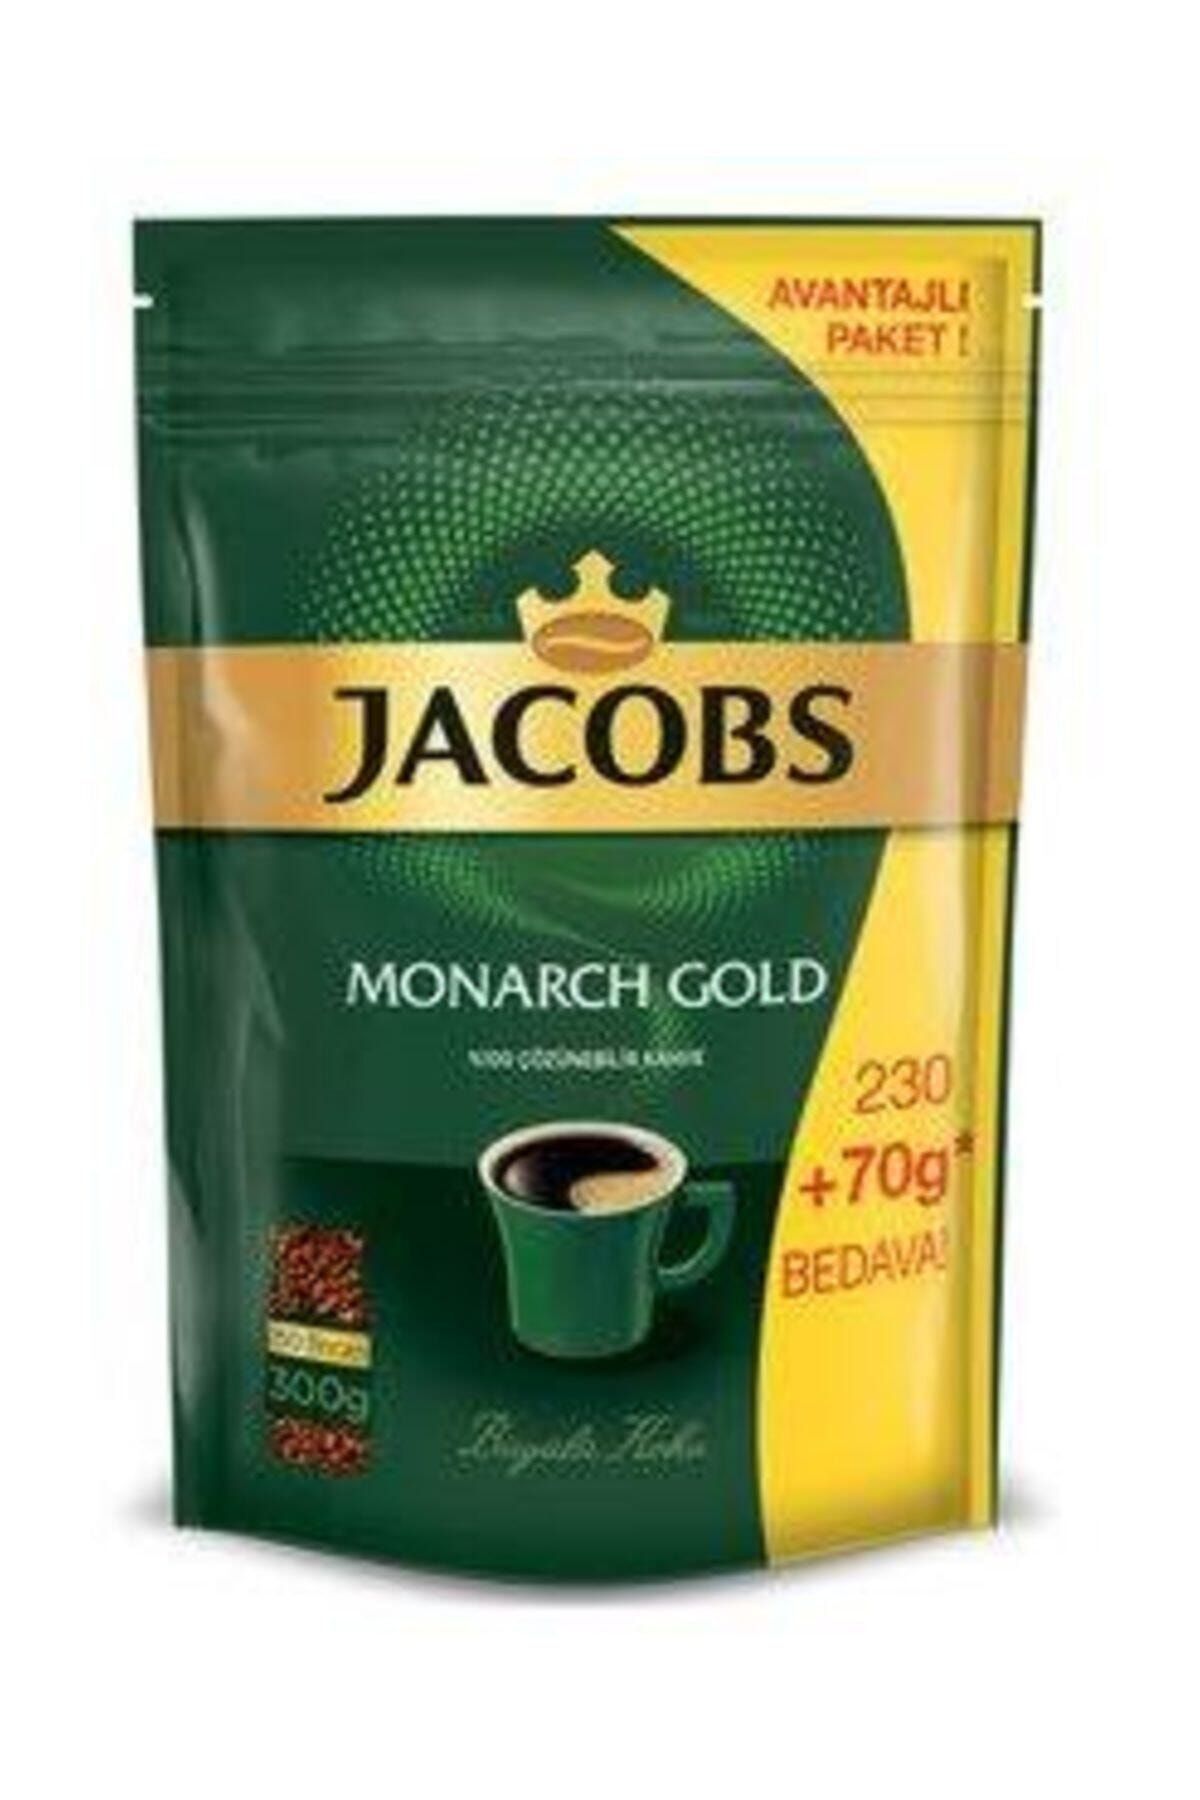 Jacobs Monarch Gold Eko Paket 230+70 Gr Hediyeli Paket